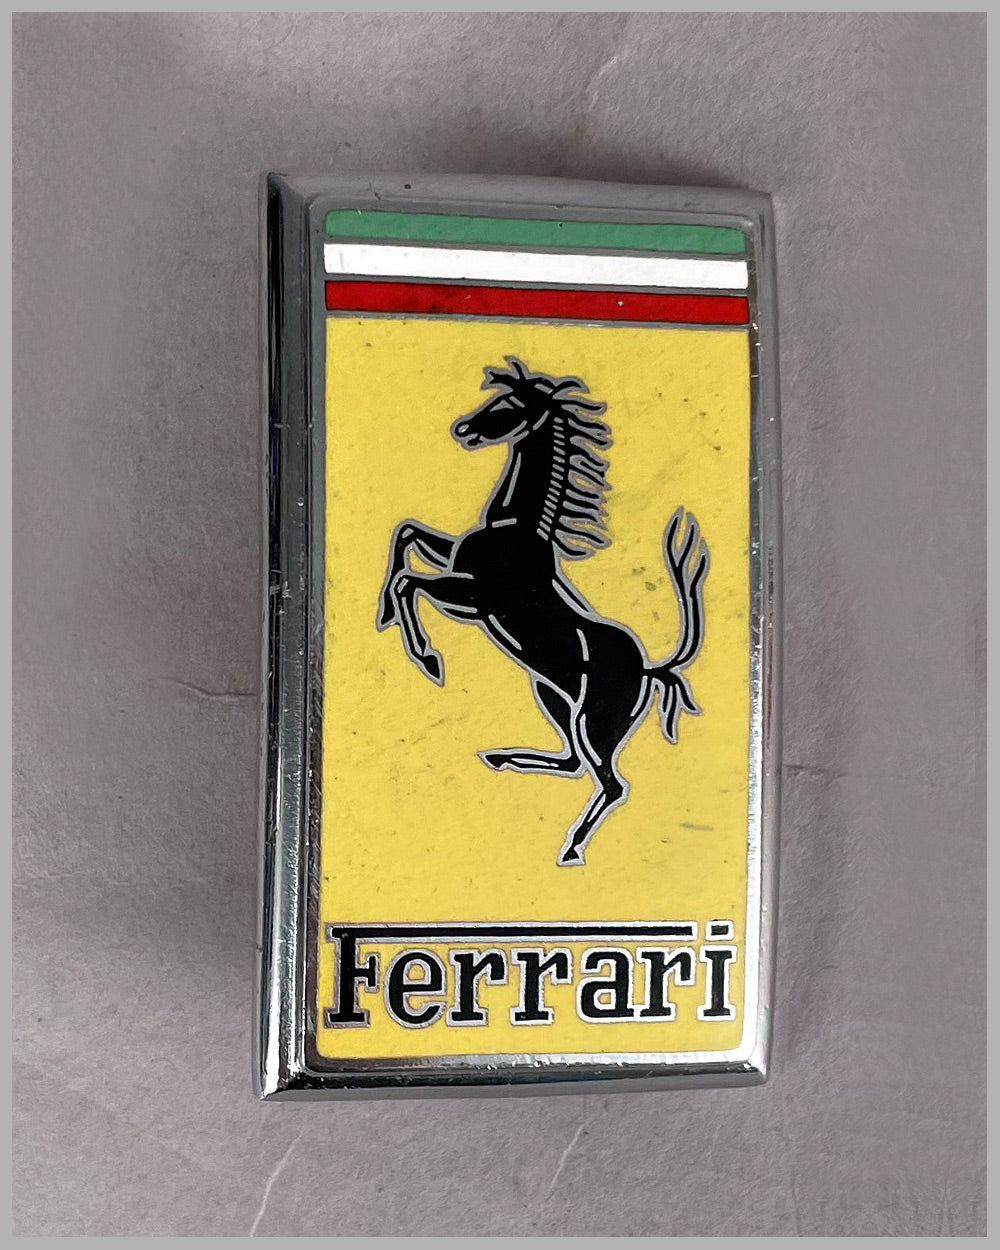 Original Ferrari factory emblem / badge by OMEA Milano